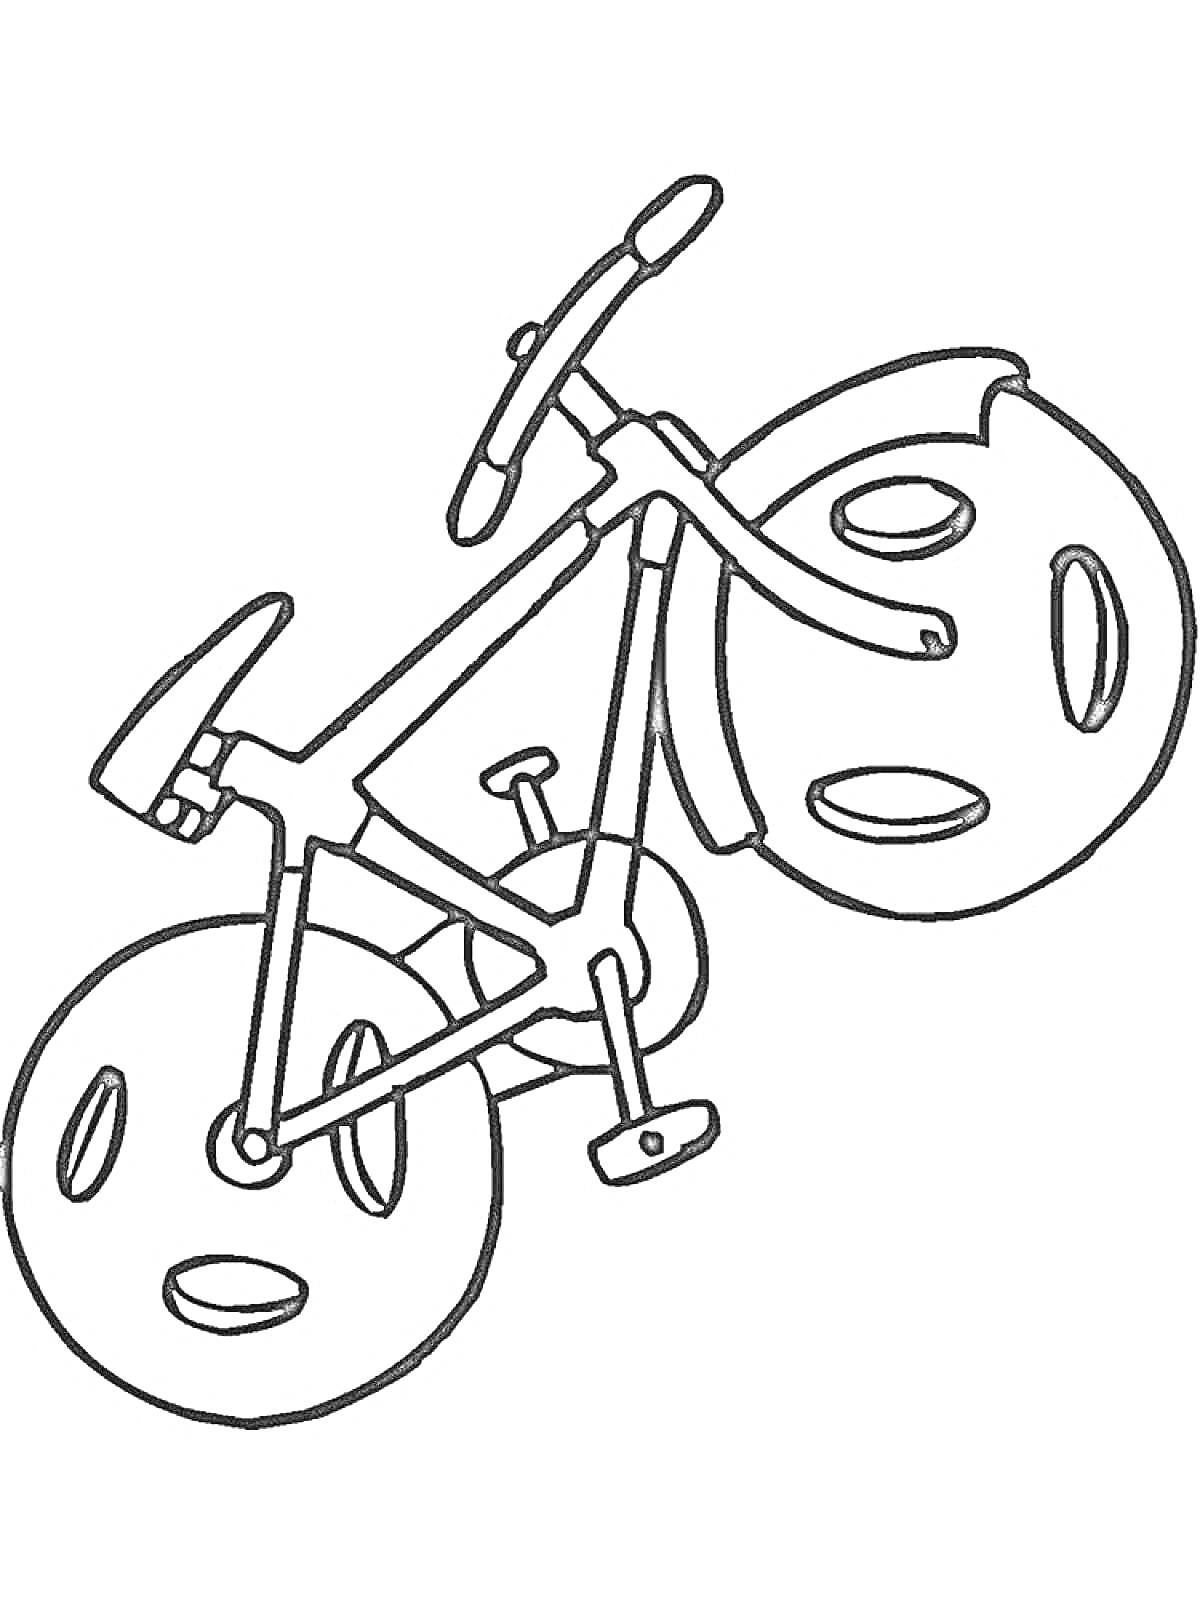 На раскраске изображено: Велосипед, Спорт, Транспорт, Колеса, Педали, Игрушки